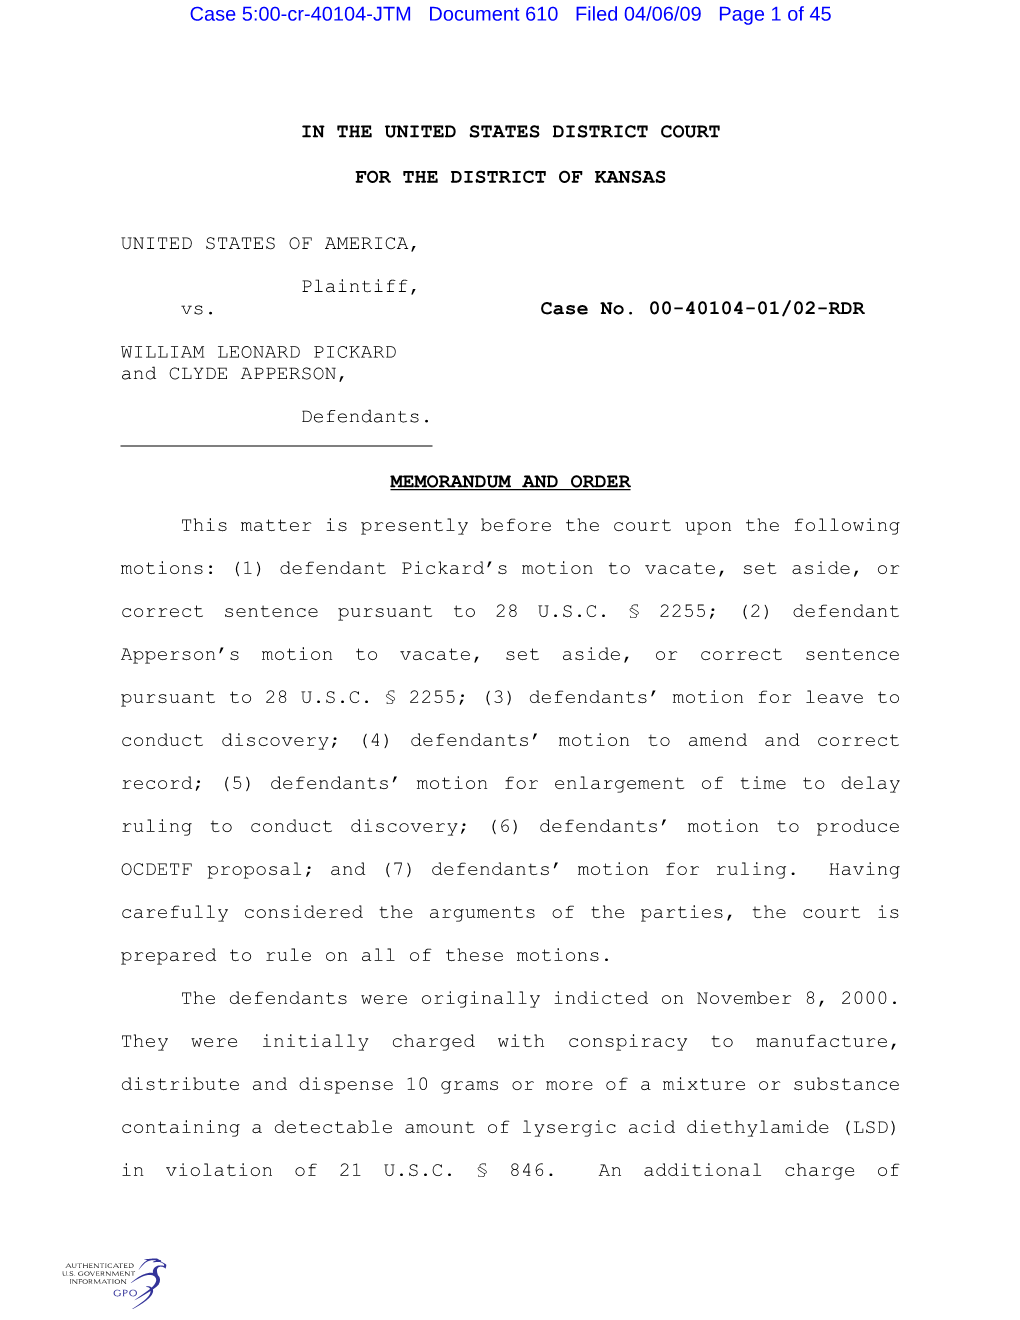 Case 5:00-Cr-40104-JTM Document 610 Filed 04/06/09 Page 1 of 45